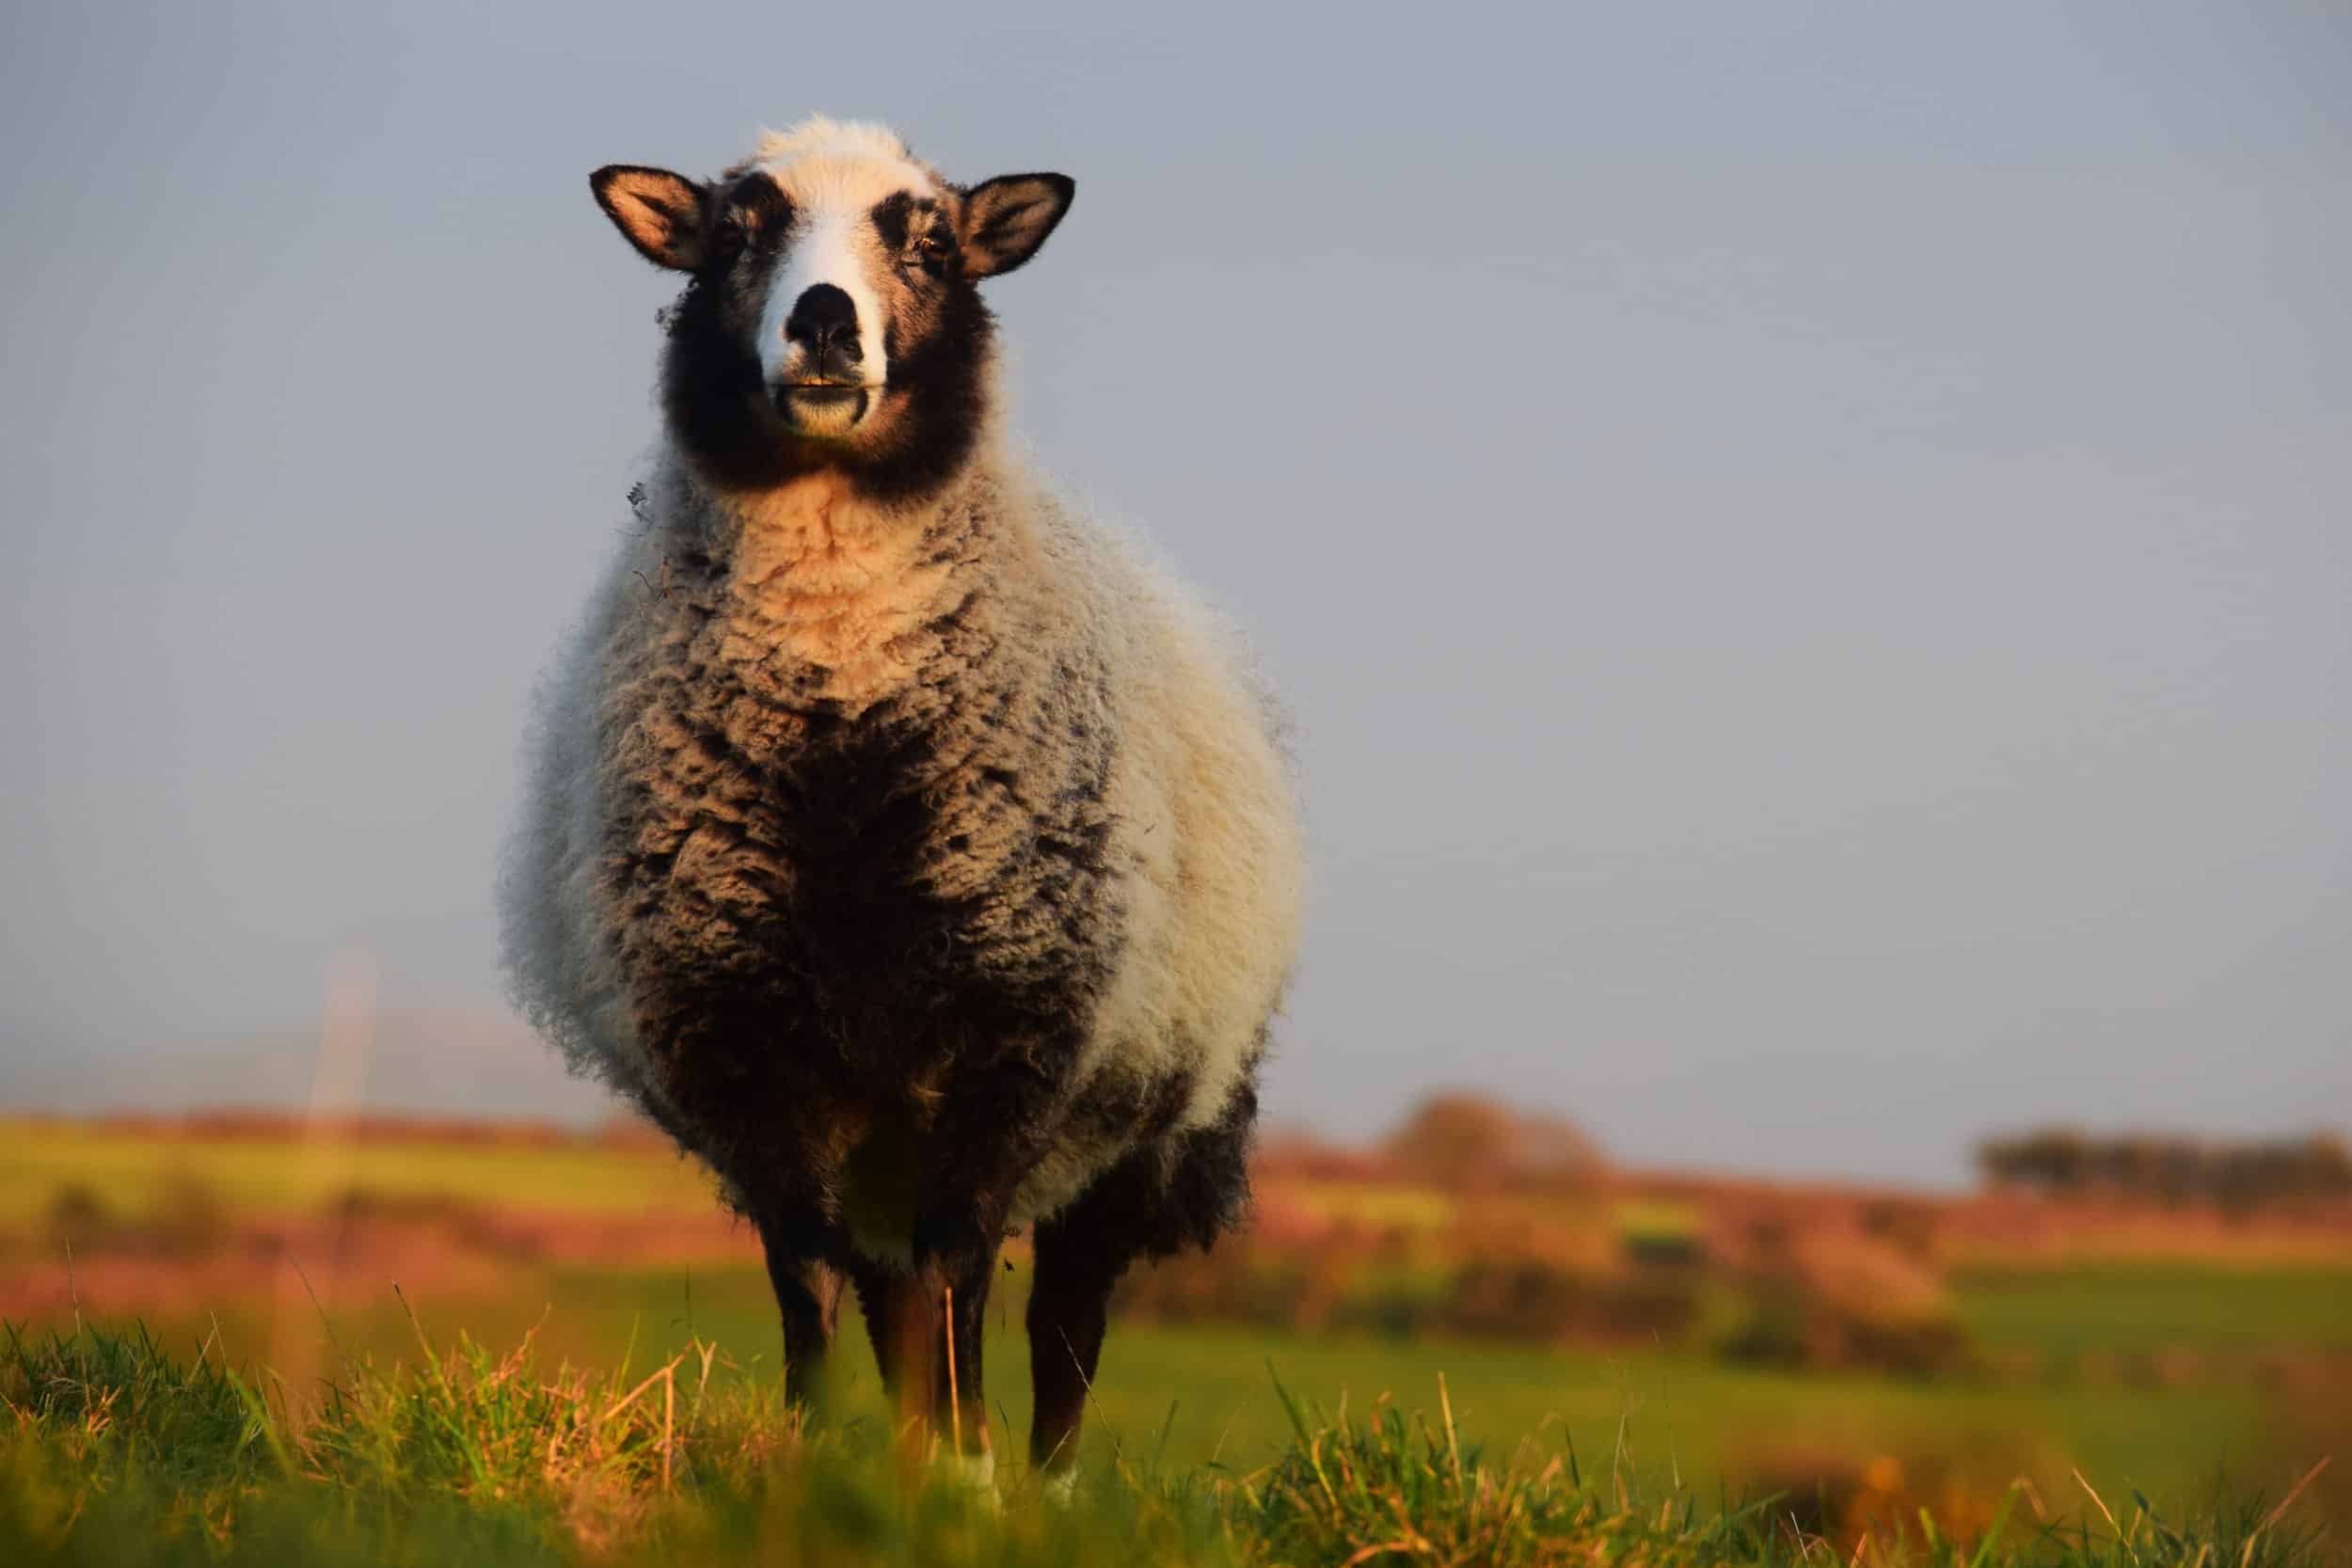 patchwork sheep smiling sunset smudge cute lamb golden soay cross shetland jacob sheep